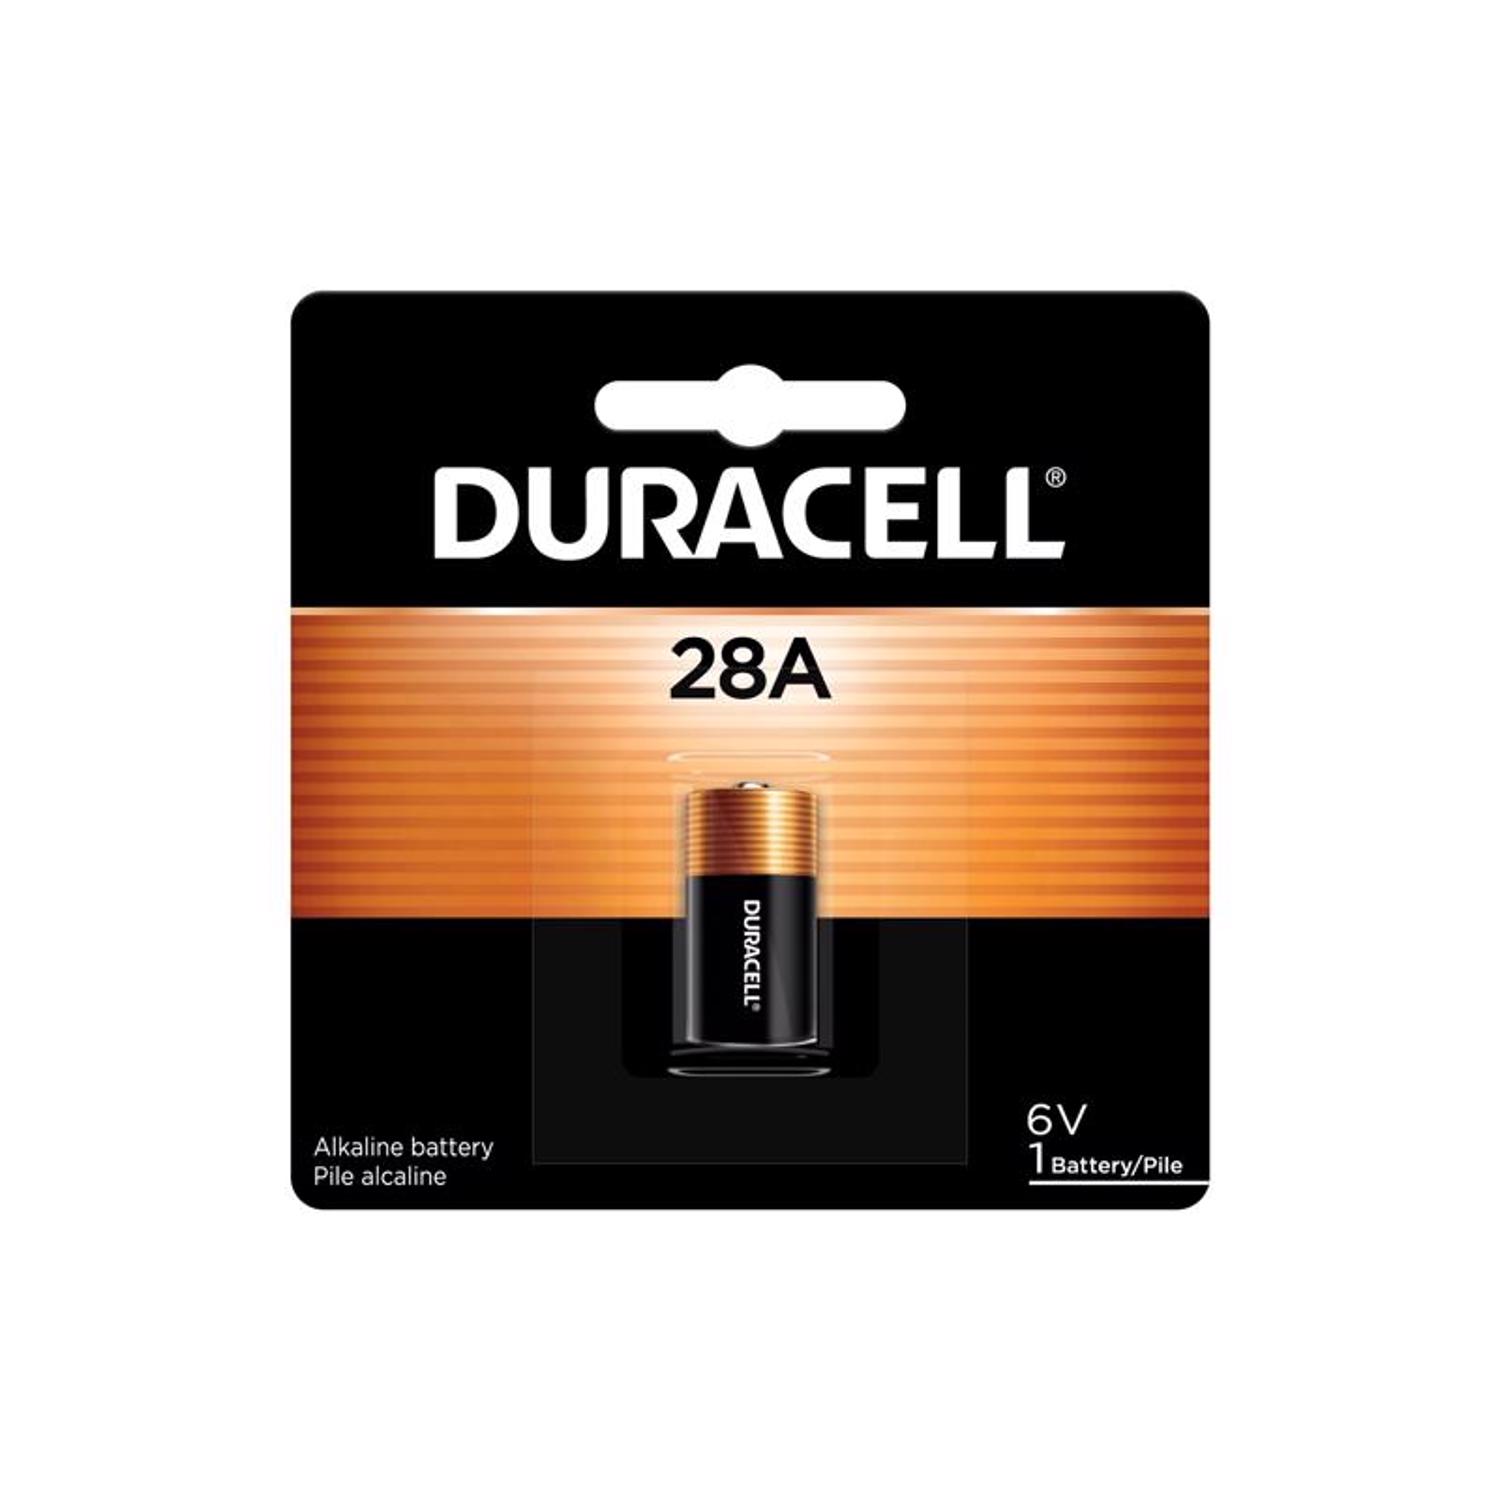 Photos - Circuit Breaker Duracell Alkaline 28A 6 V 105 mAh Medical Battery 1 pk PX28ABPK 